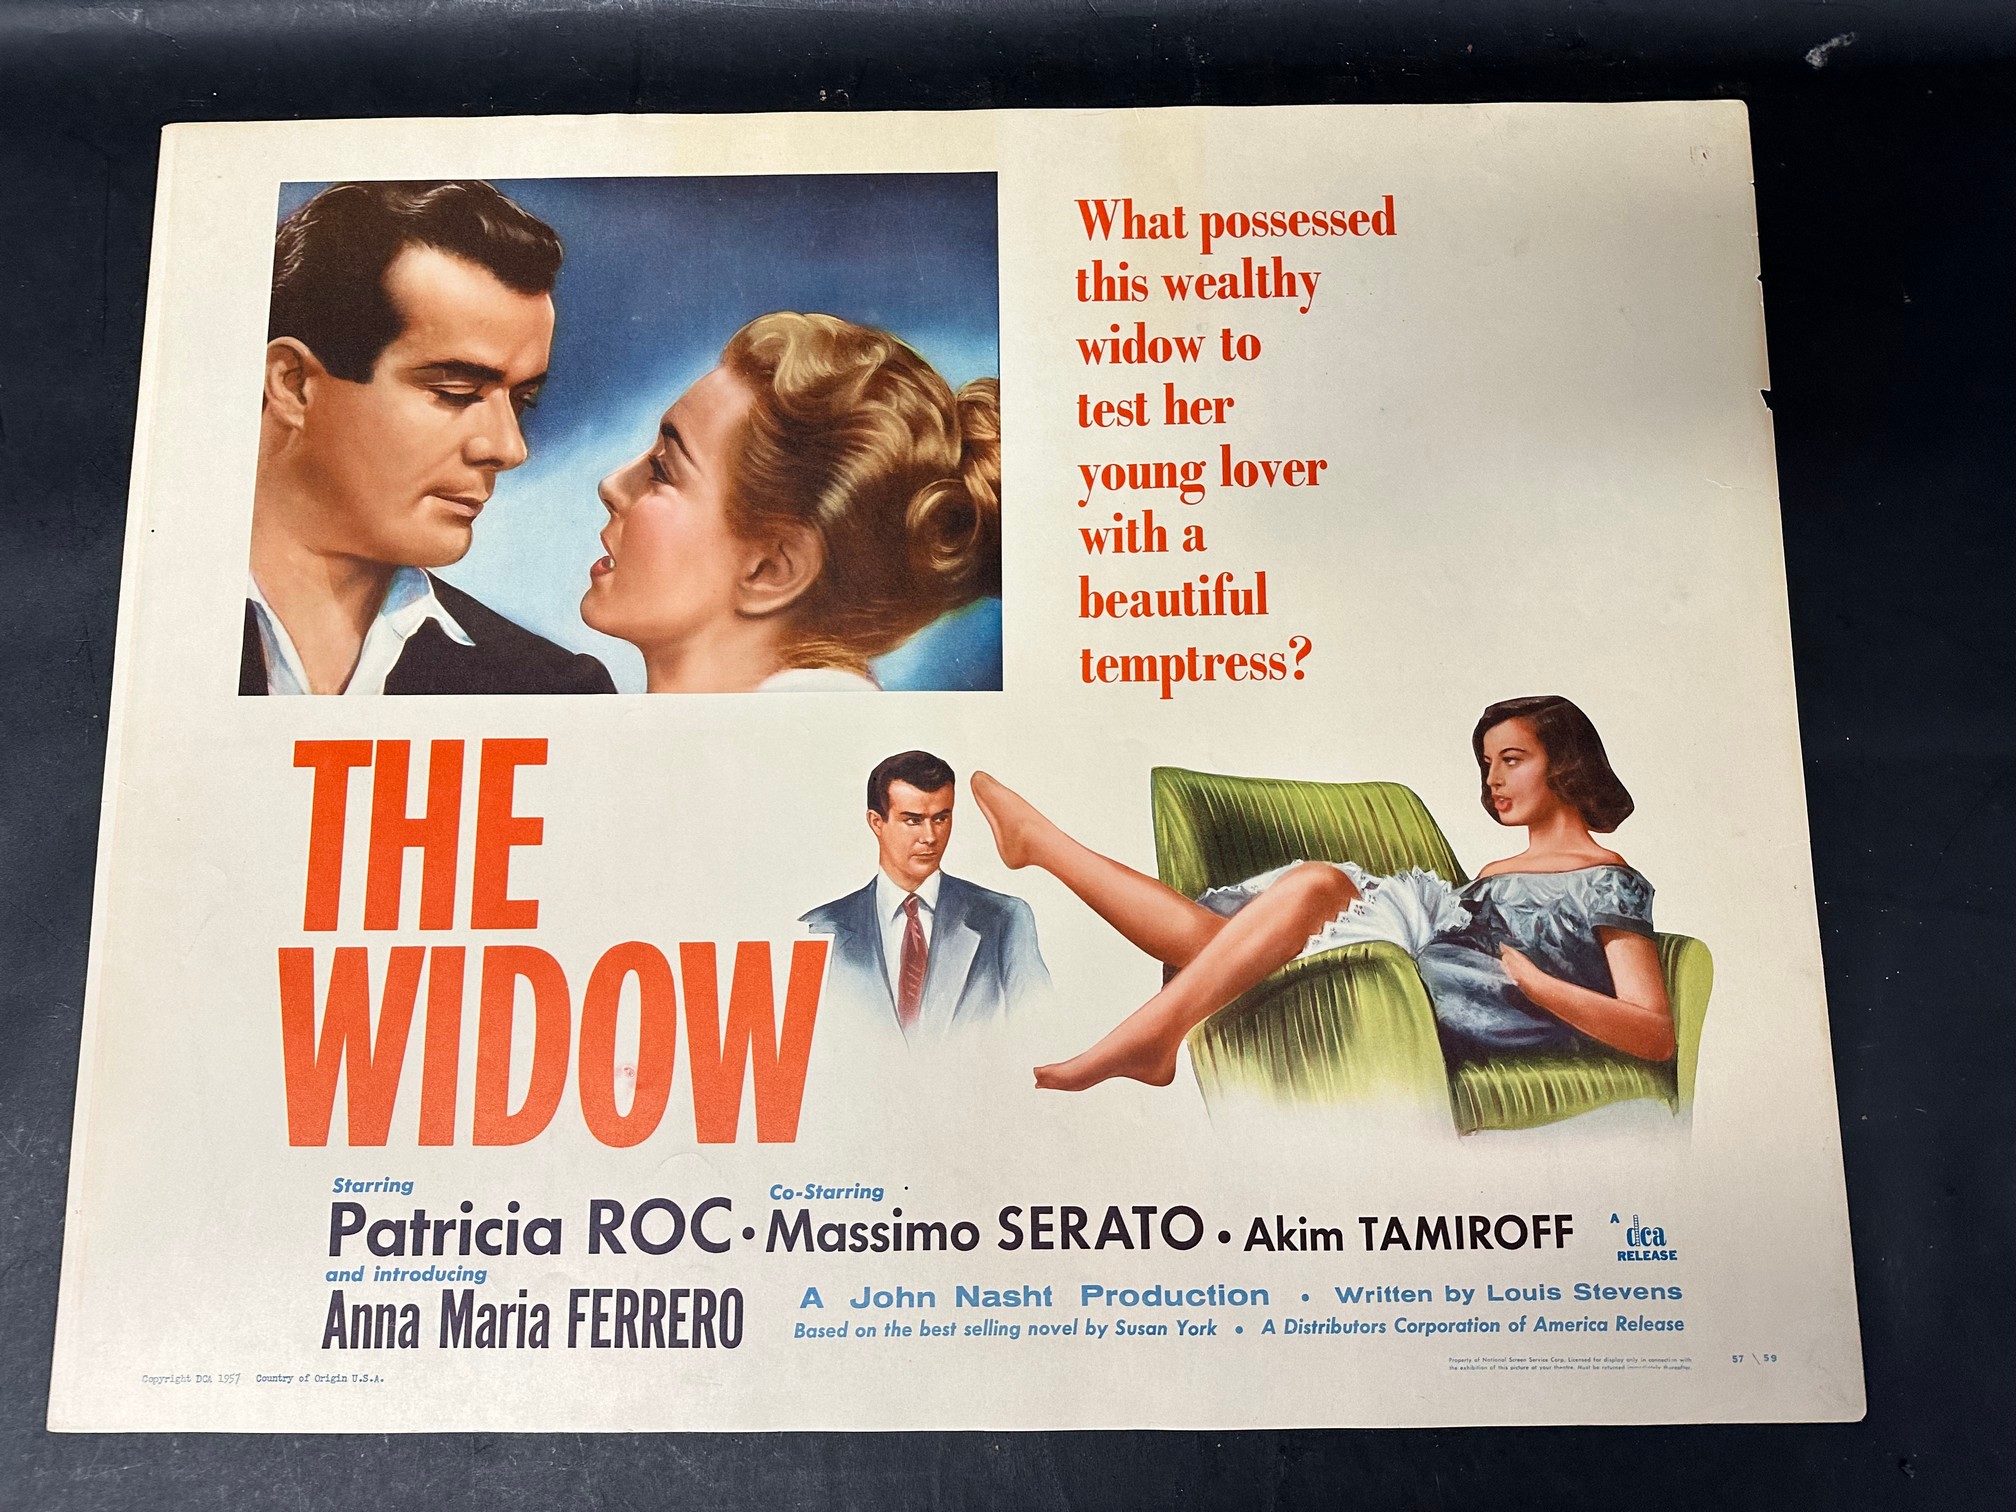 An original 1957 USA film poster for The Widow starring Patricia ROC, Anna Maria Ferrero, a John